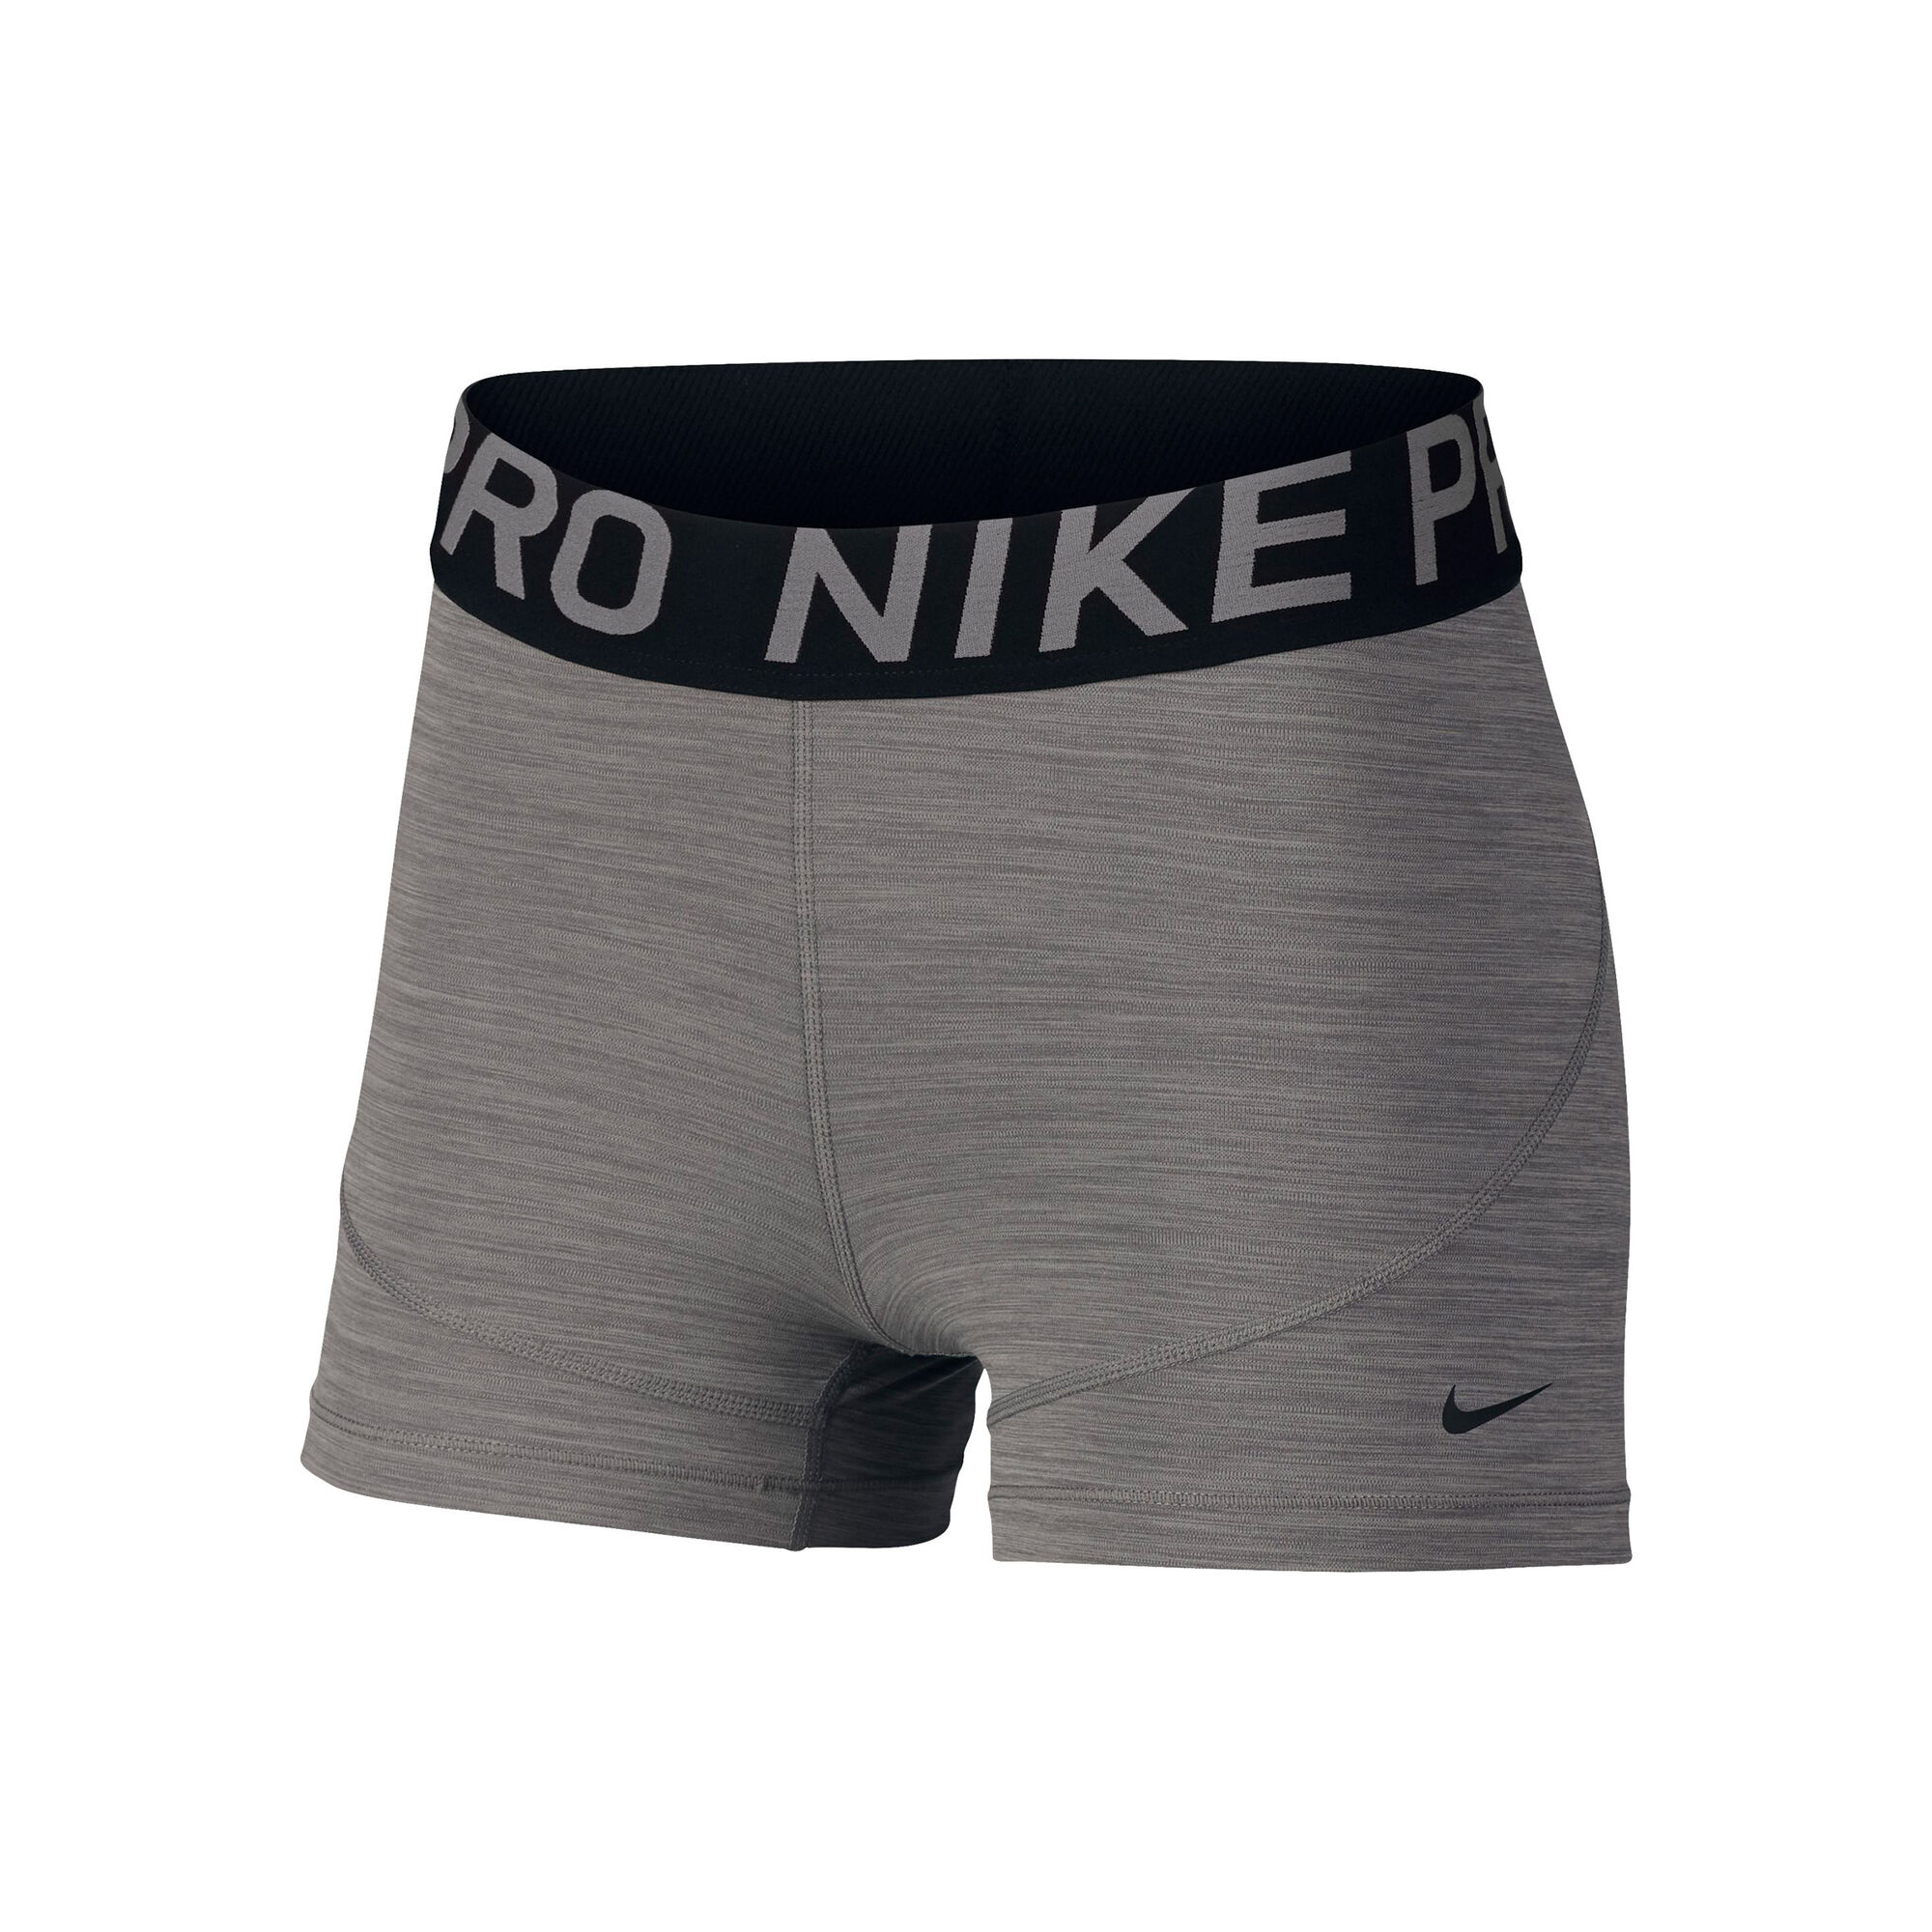 buy Nike Pro Tight Women - Grey, Black online | Tennis-Point